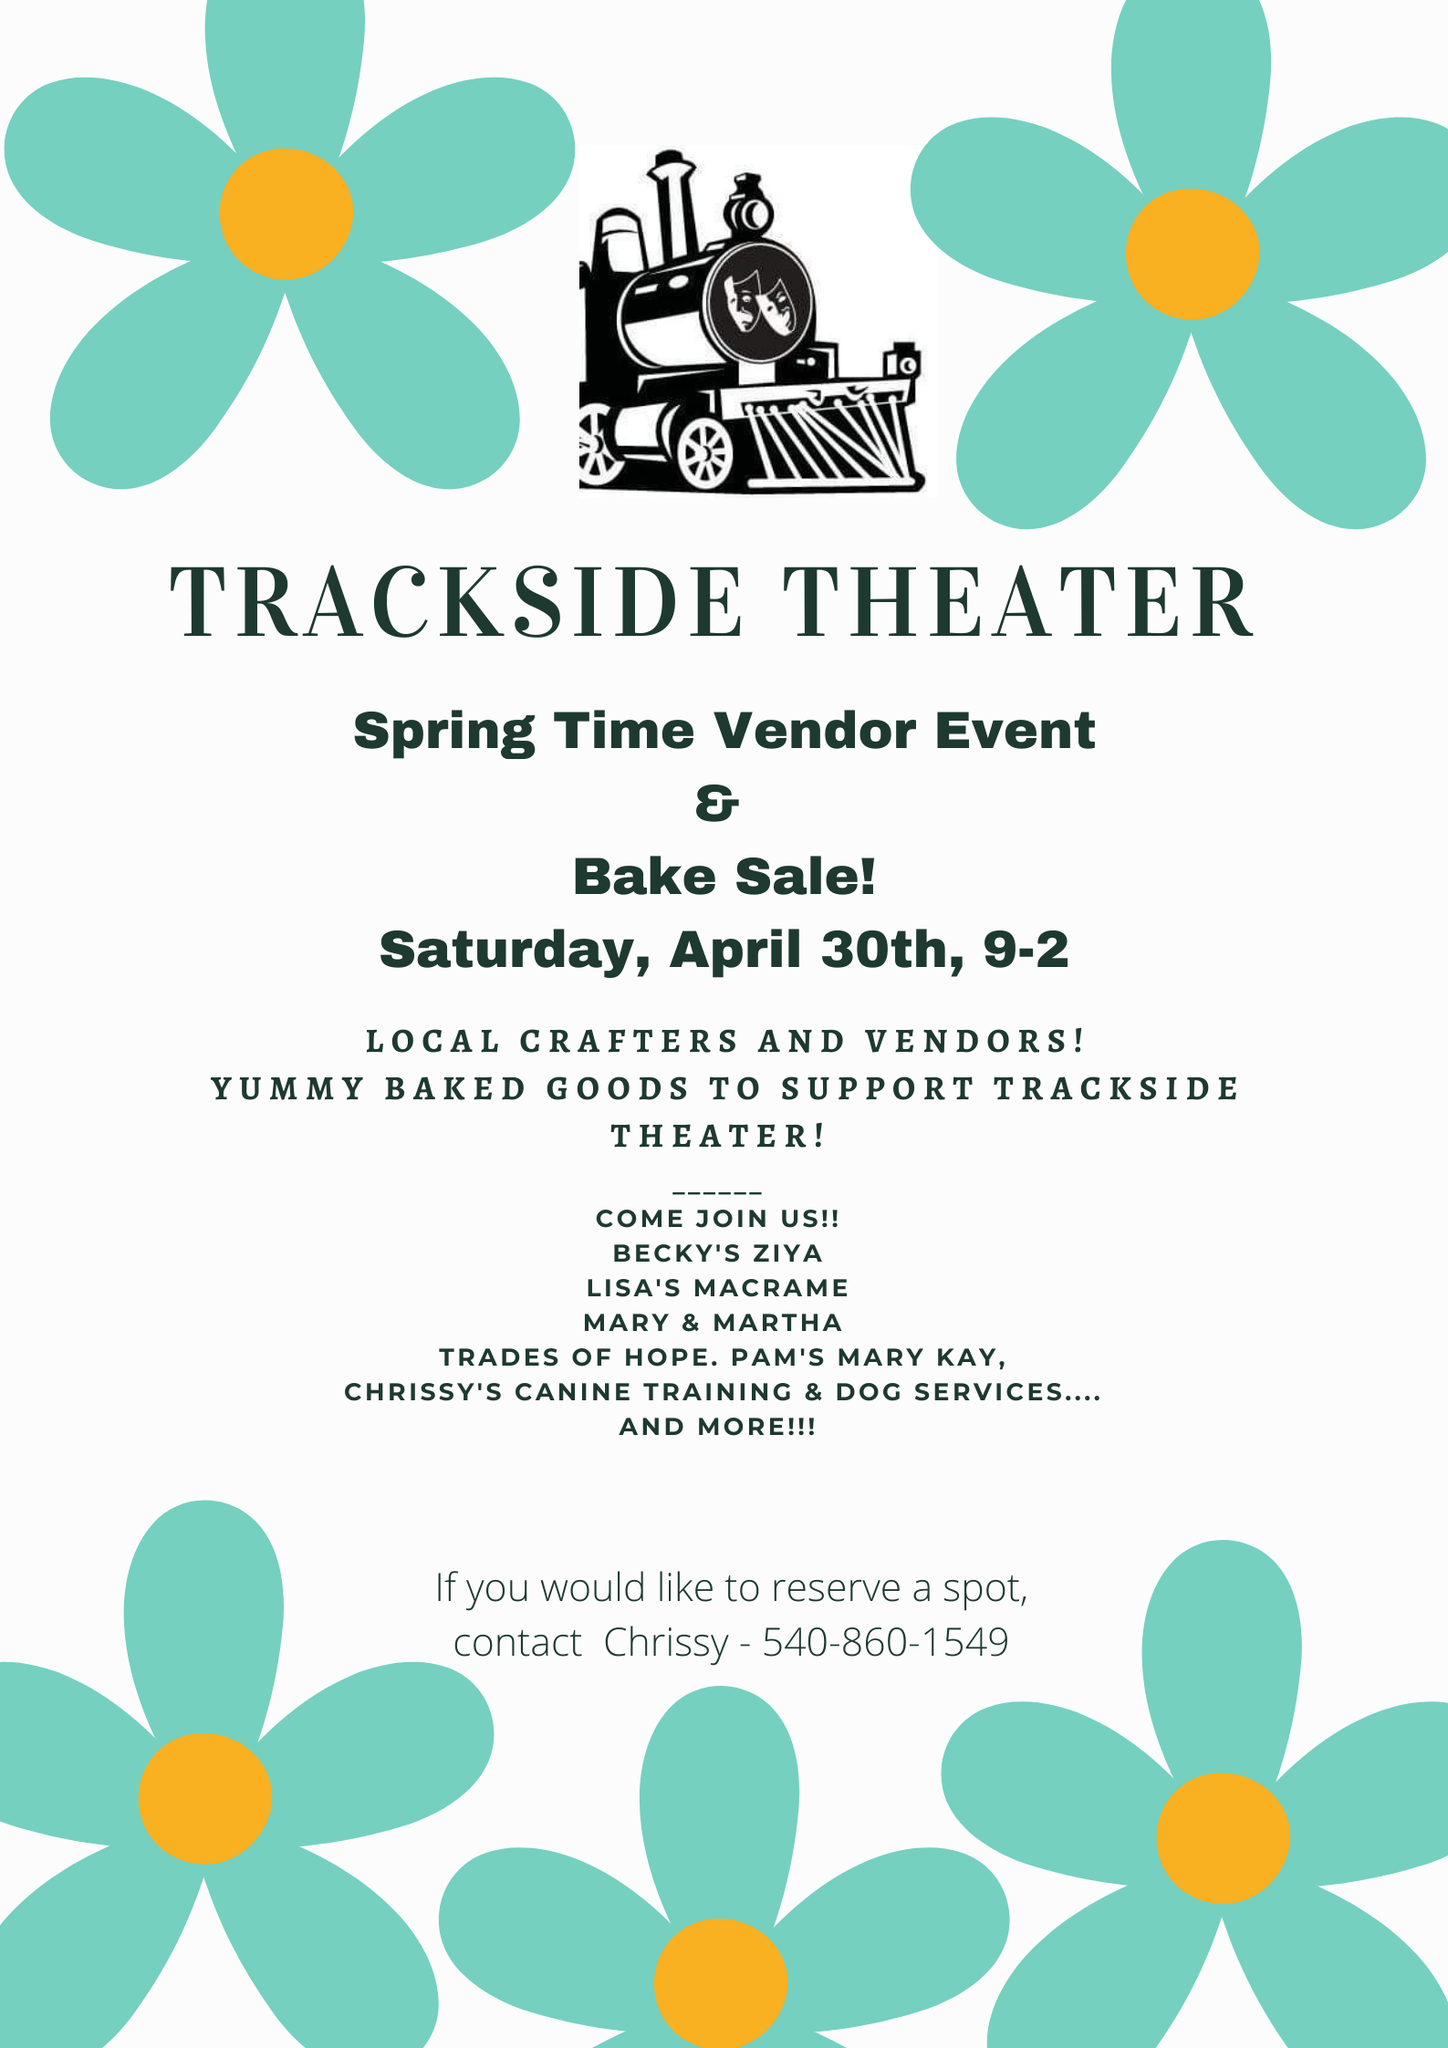 trackside theater spring 2022 vendor event flyer